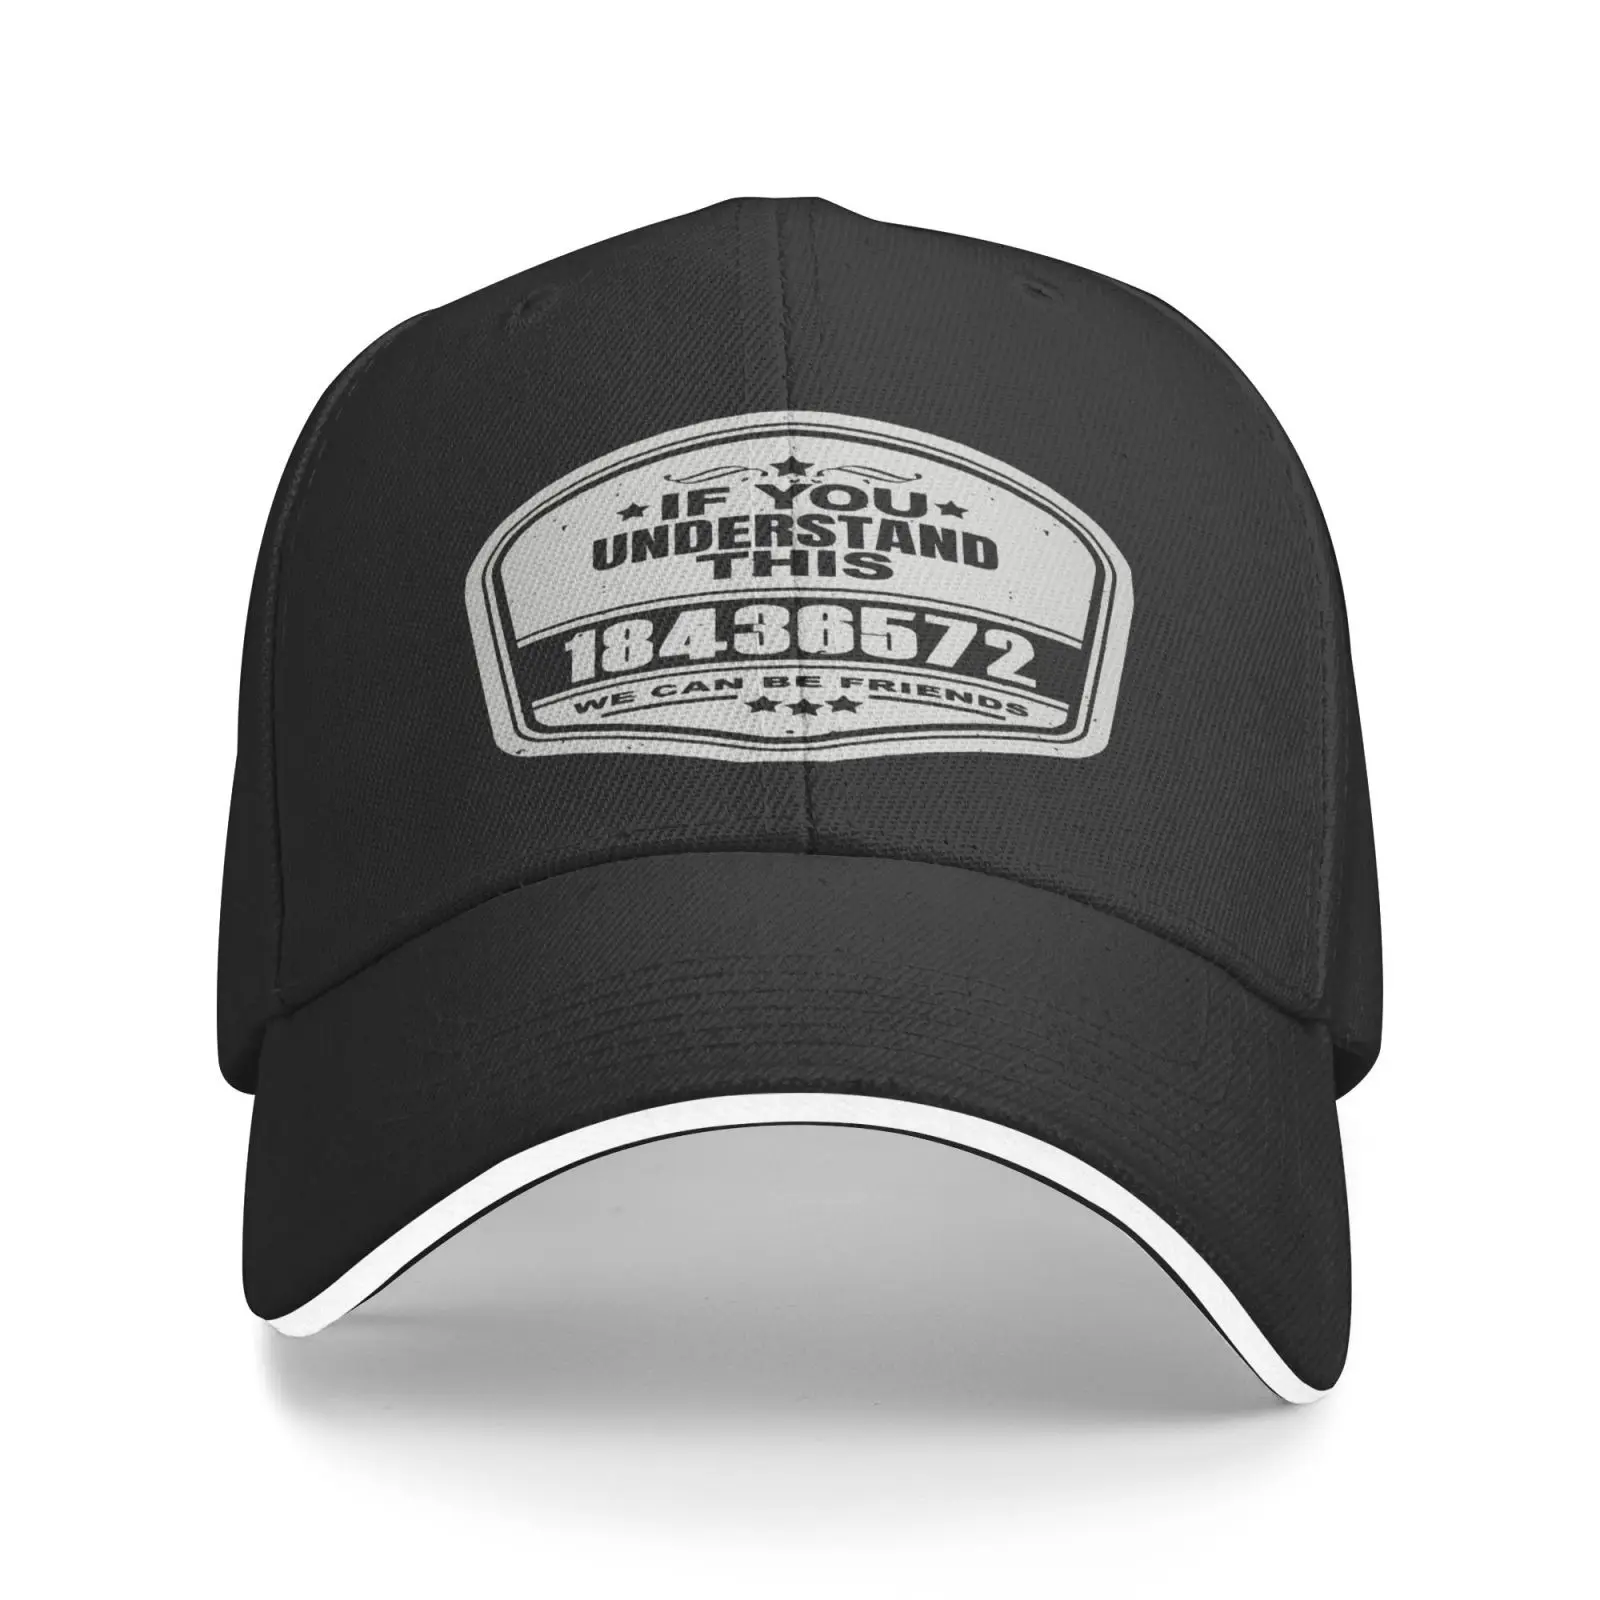 

18436572 Awesome V8 Firing Order Car Hats For Men Women's Caps Beanies For Women Brazil Hat Male Streetwear Men's Cap Knit Hat